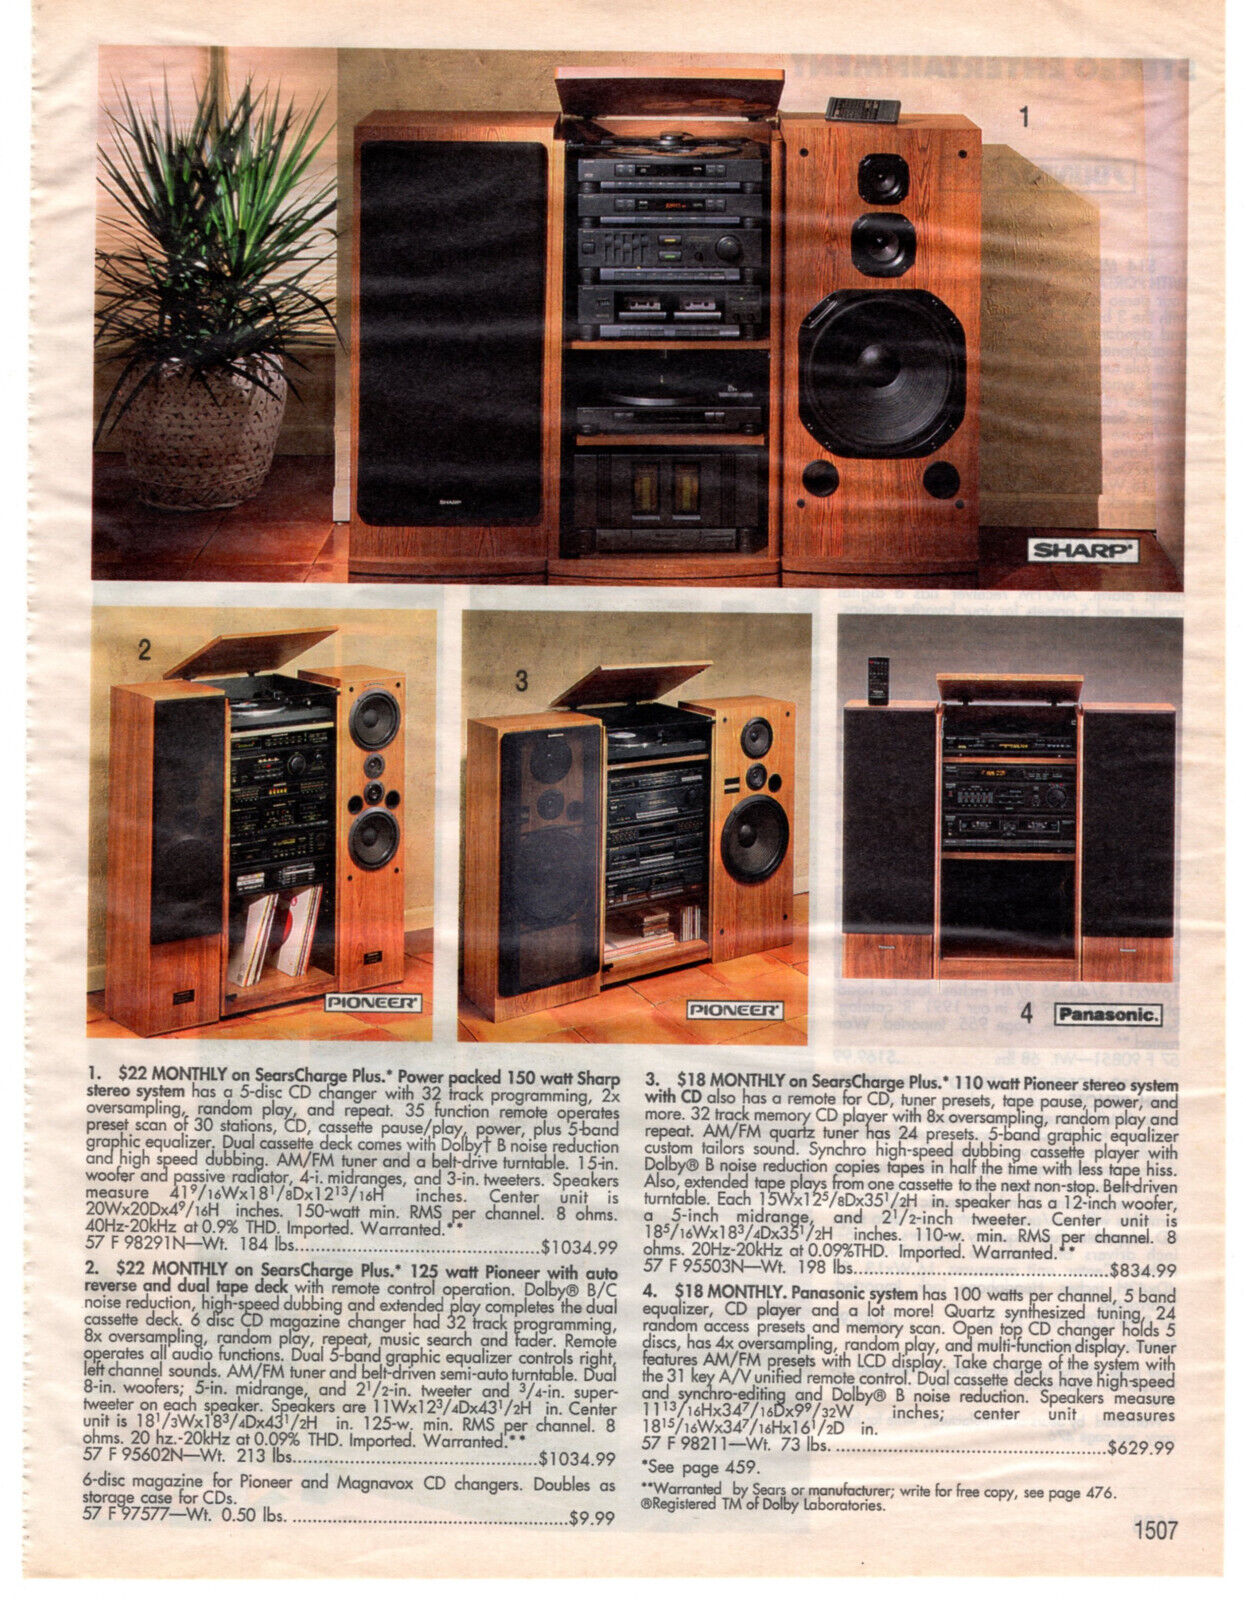 Sears Stereo Systems SHARP PANASONIC PIONEER 1991 Vintage Print Ad Original